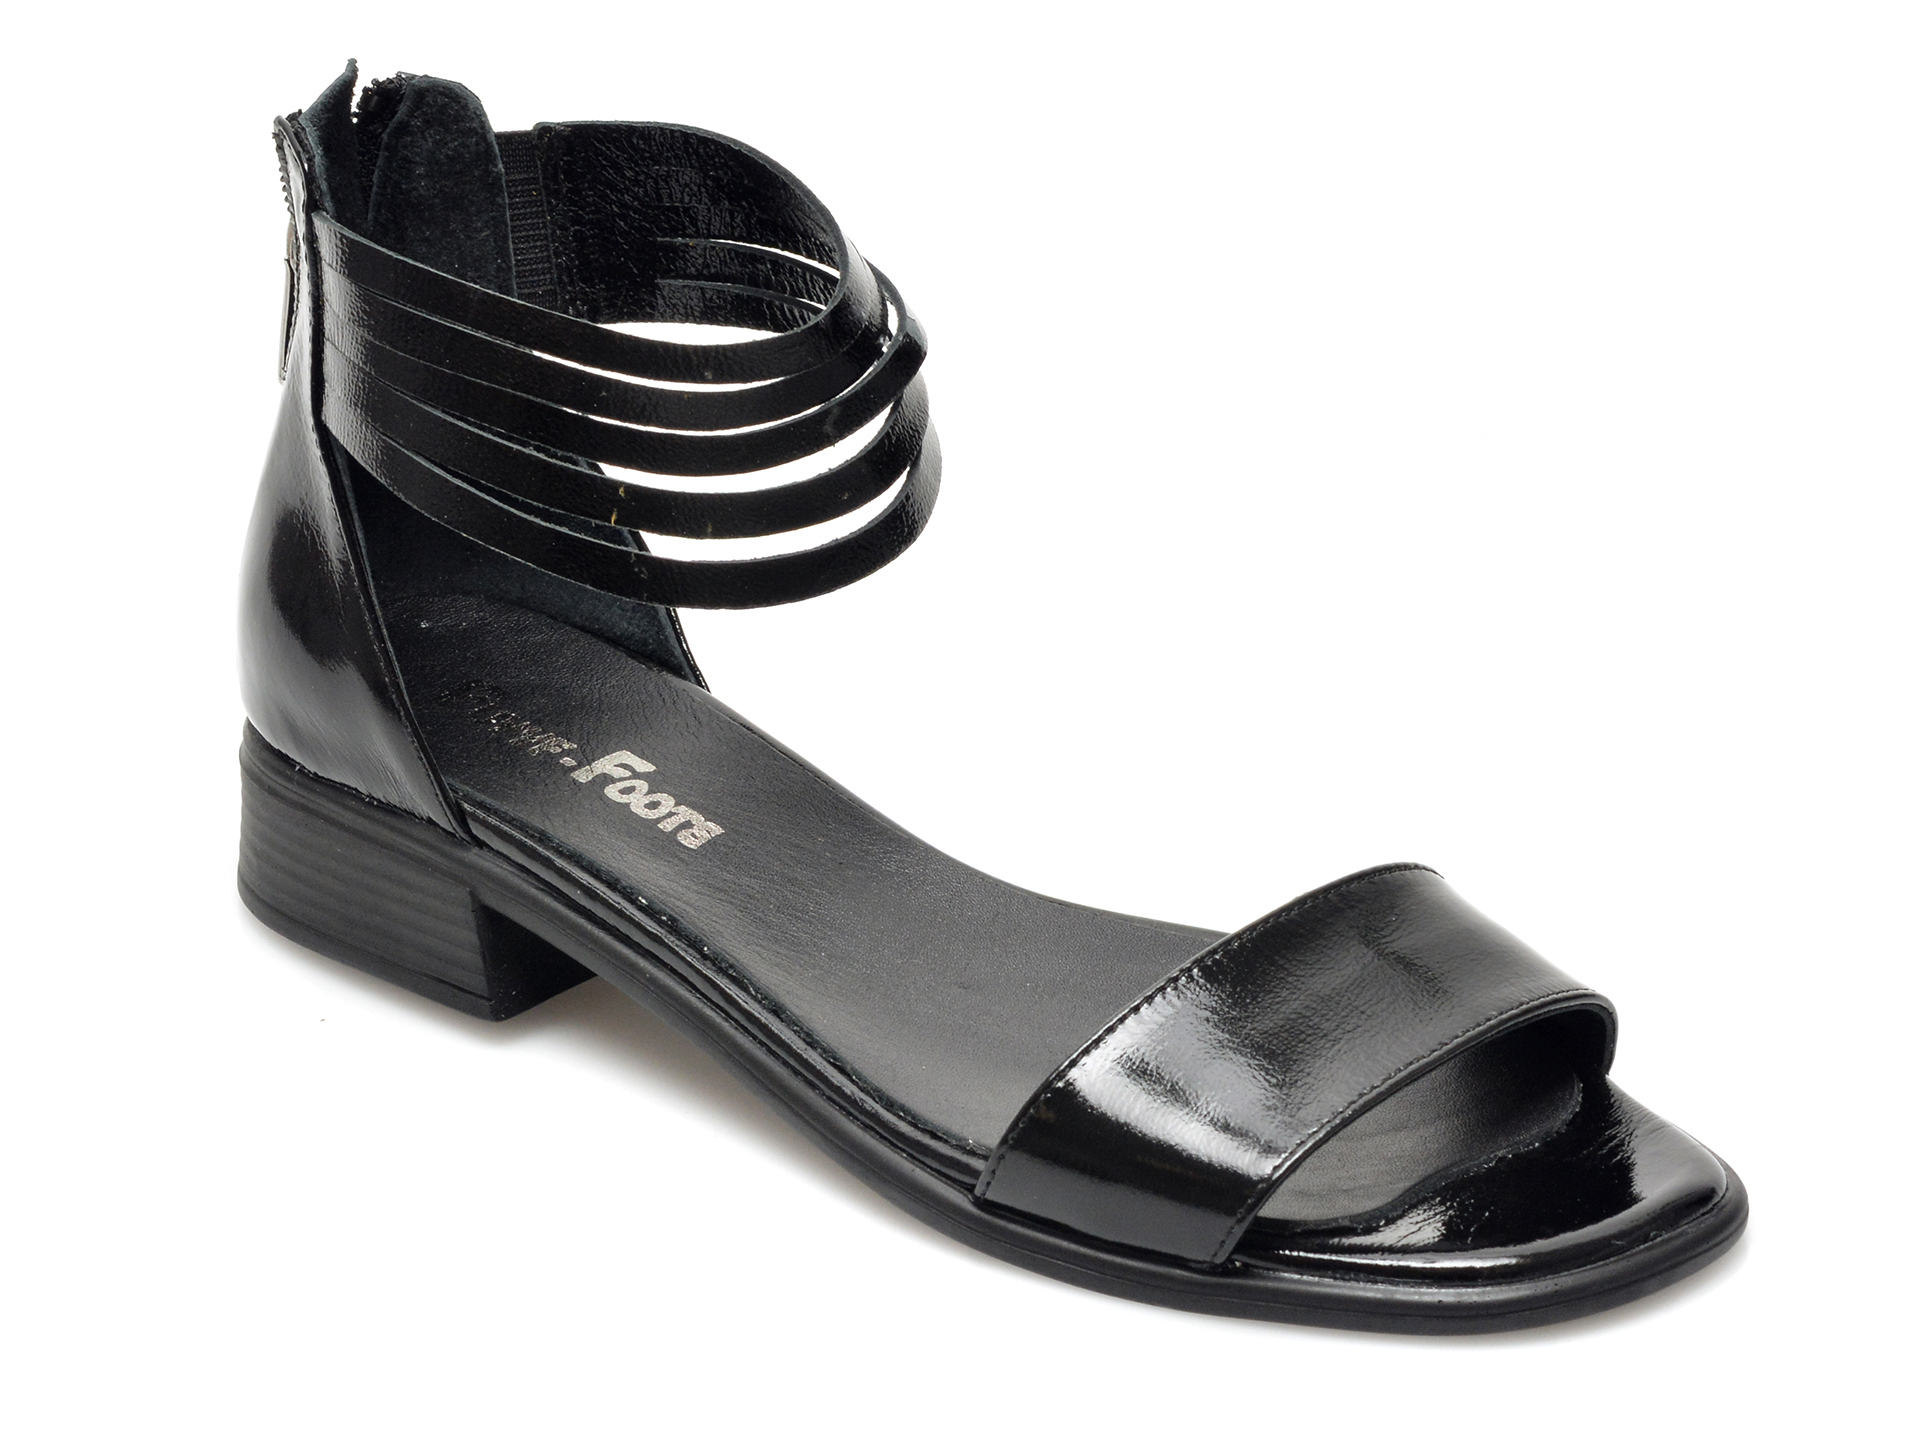 Sandale PUYYF FOOTS negre, 18206, din piele naturala lacuita otter.ro otter.ro